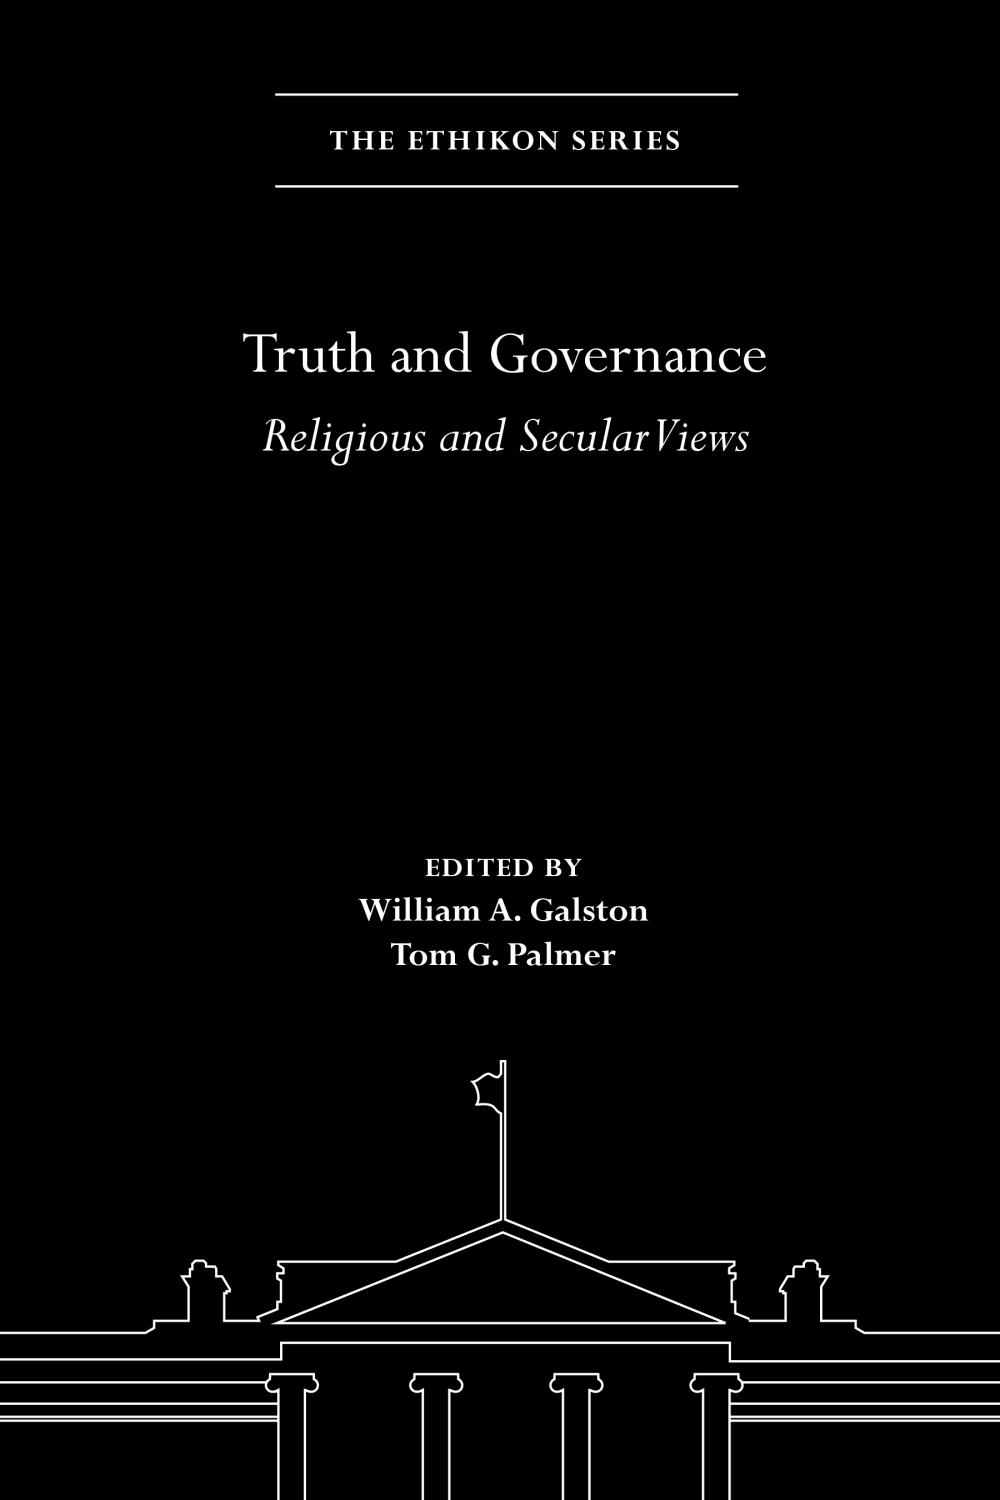 Cvr: Truth and Governance